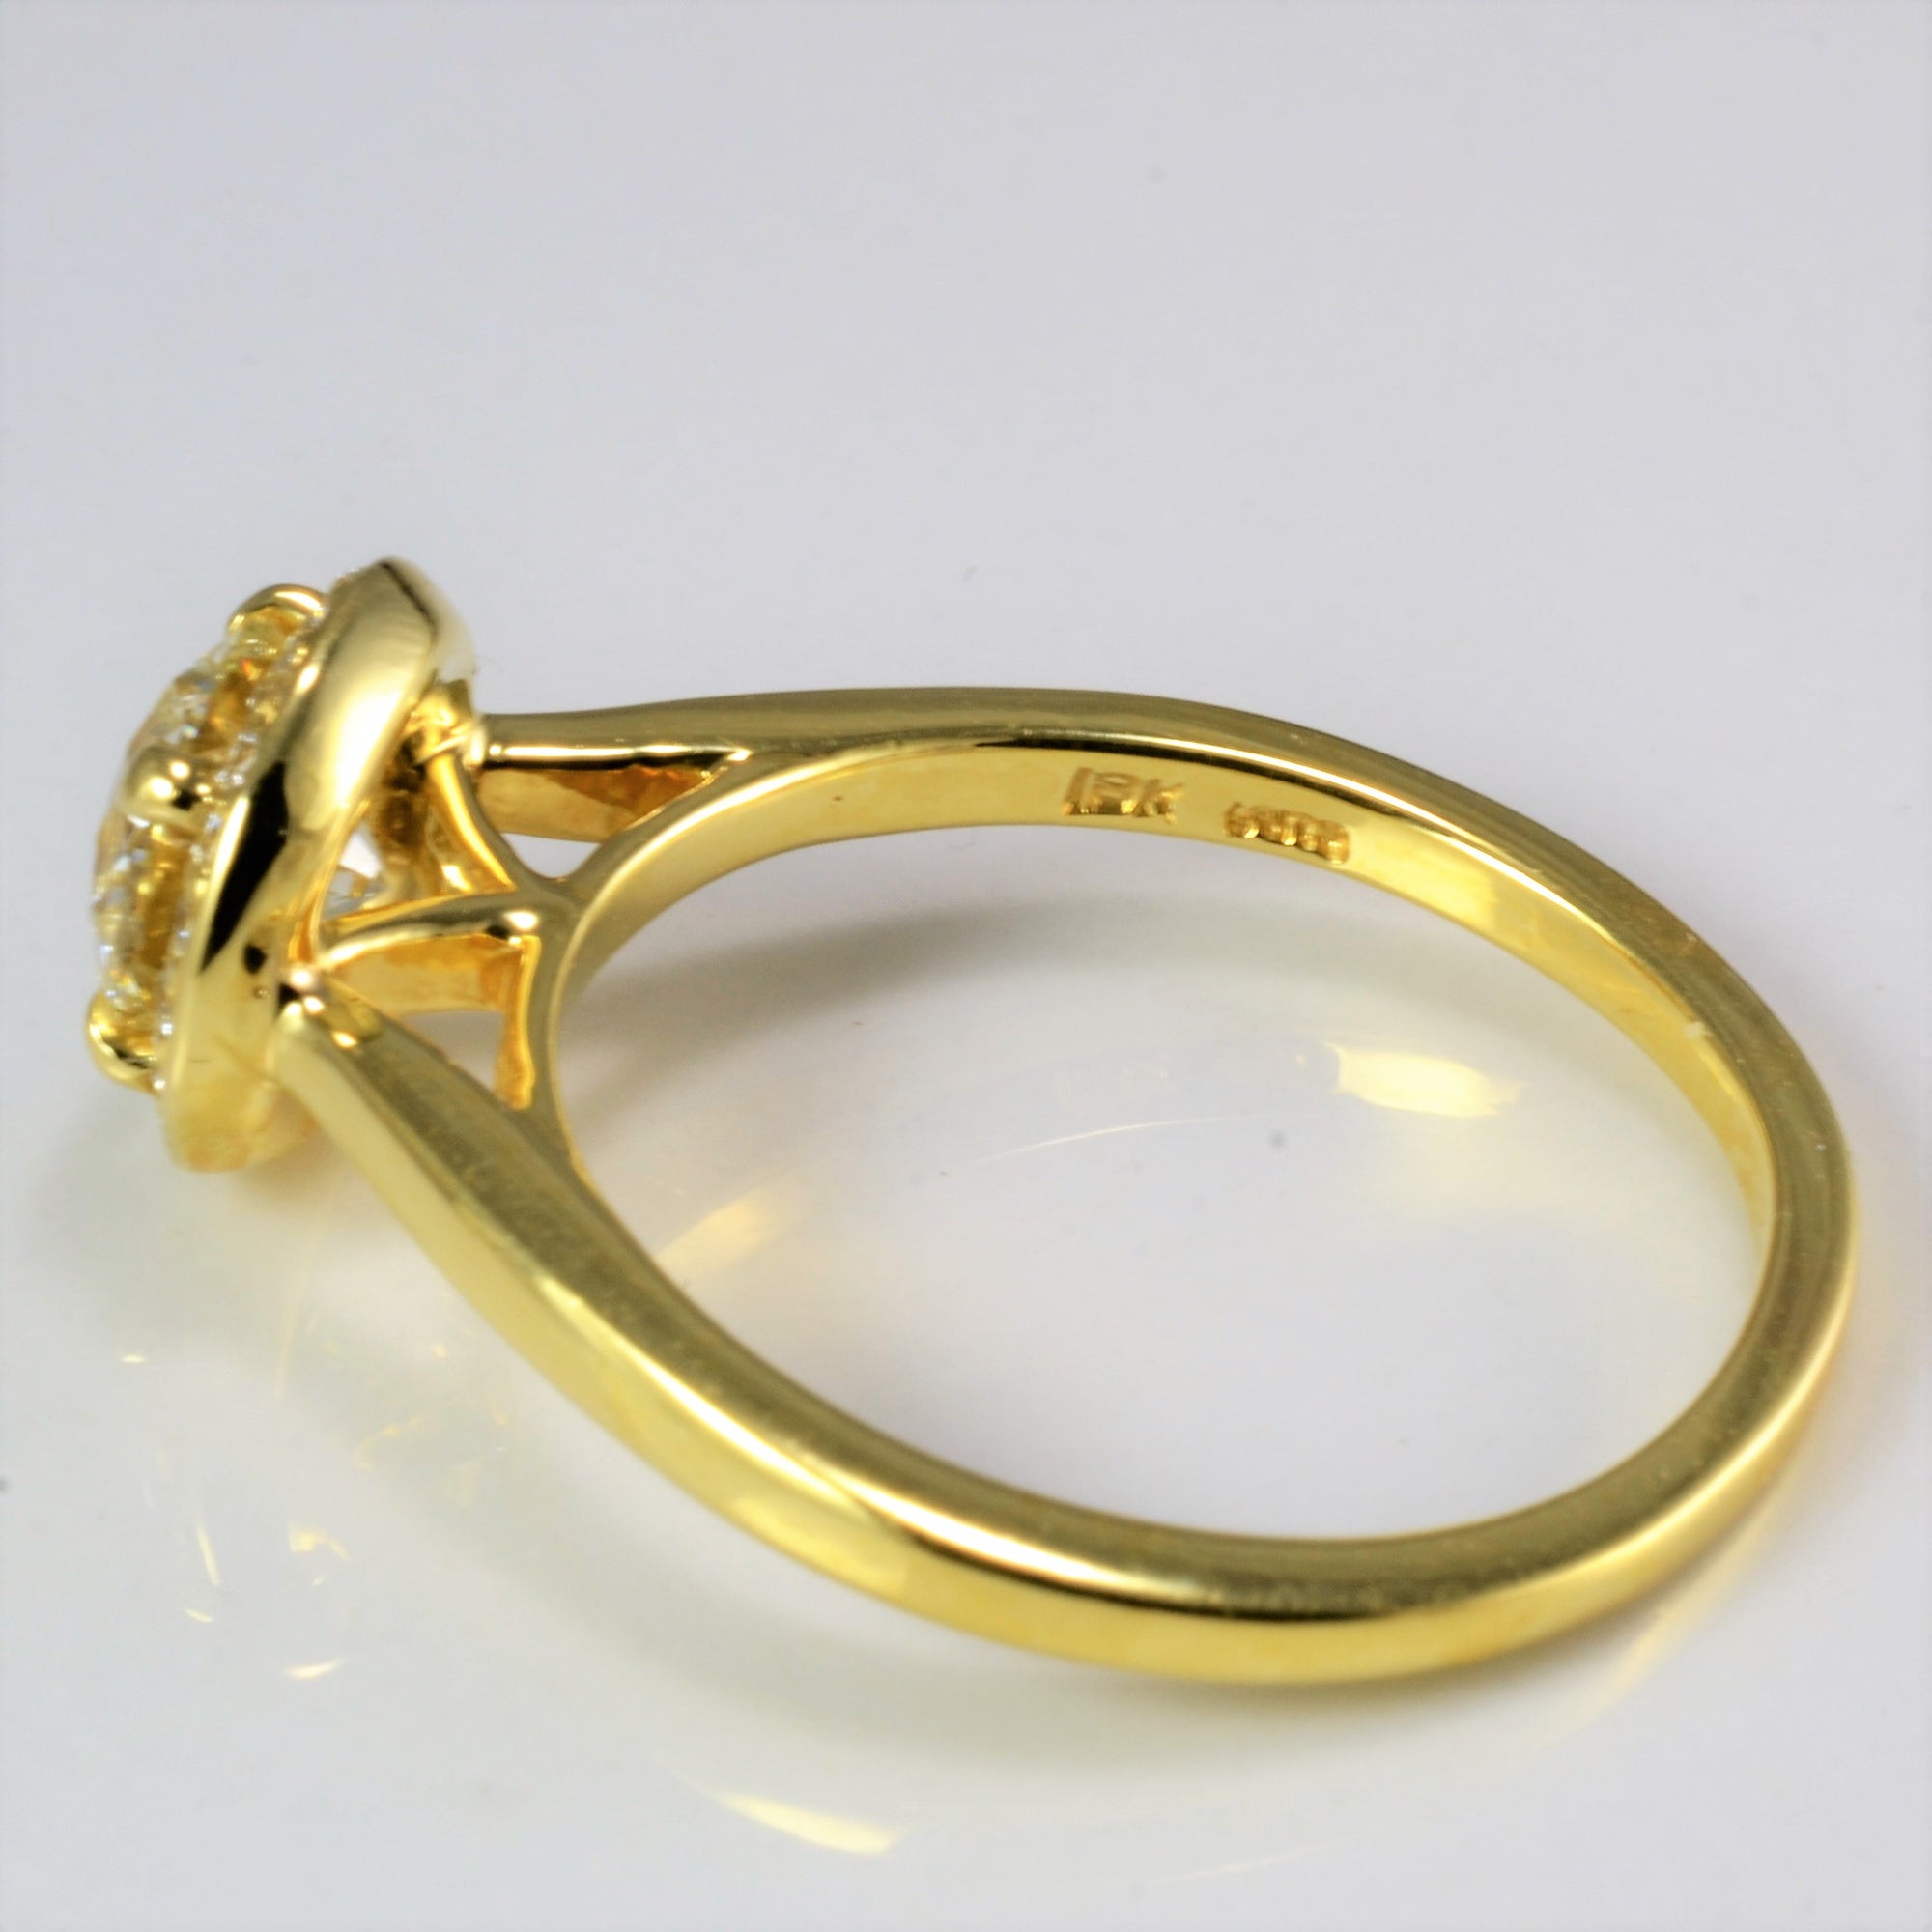 Halo Diamond Engagement Ring | 1.11ctw | SZ 7.25 |